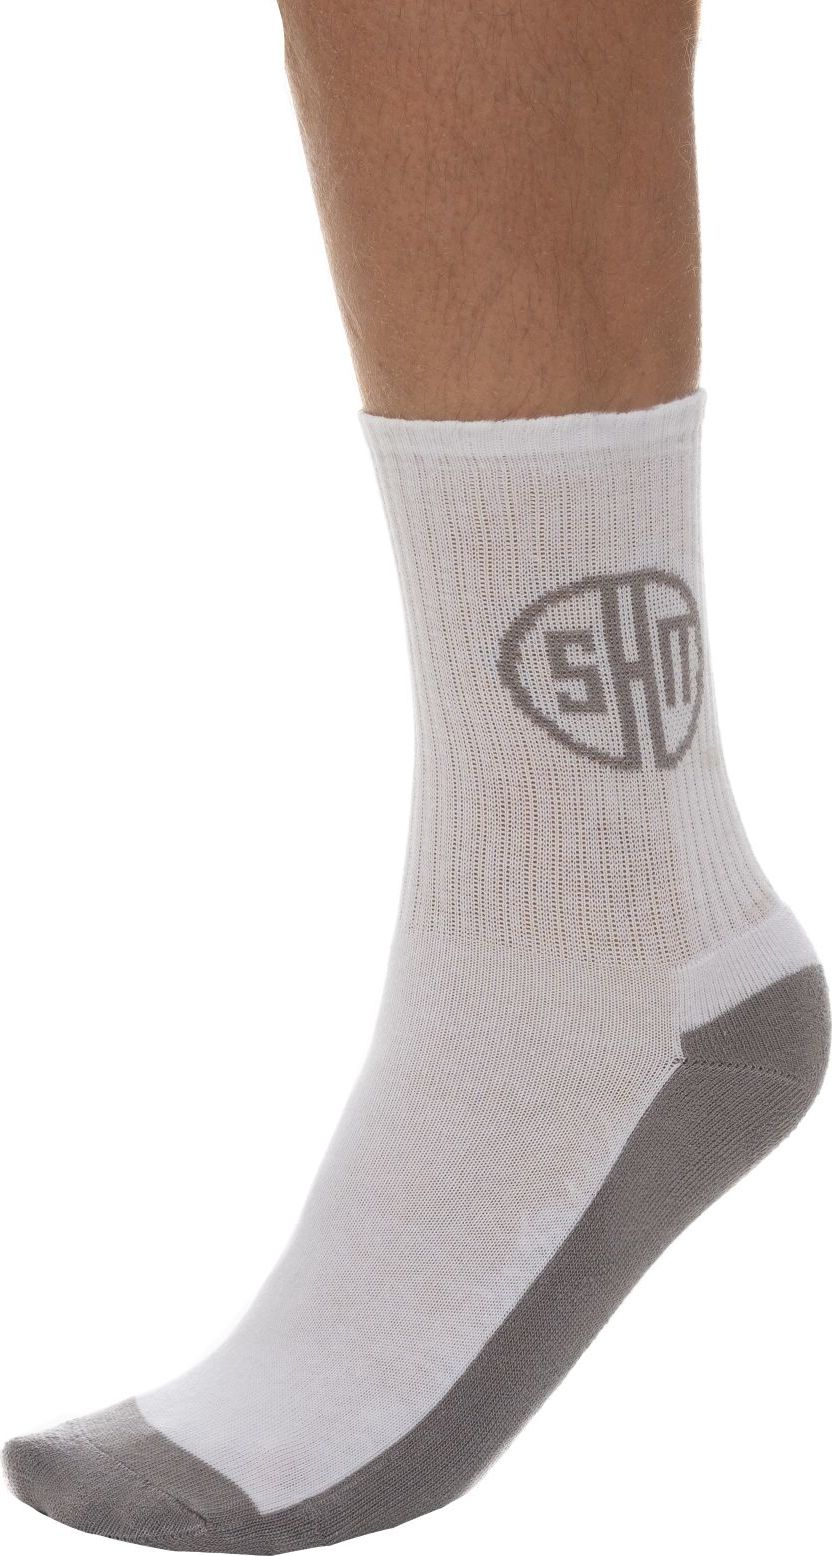 Ponožky SAM 73 Waco bílé Velikost: 35-38